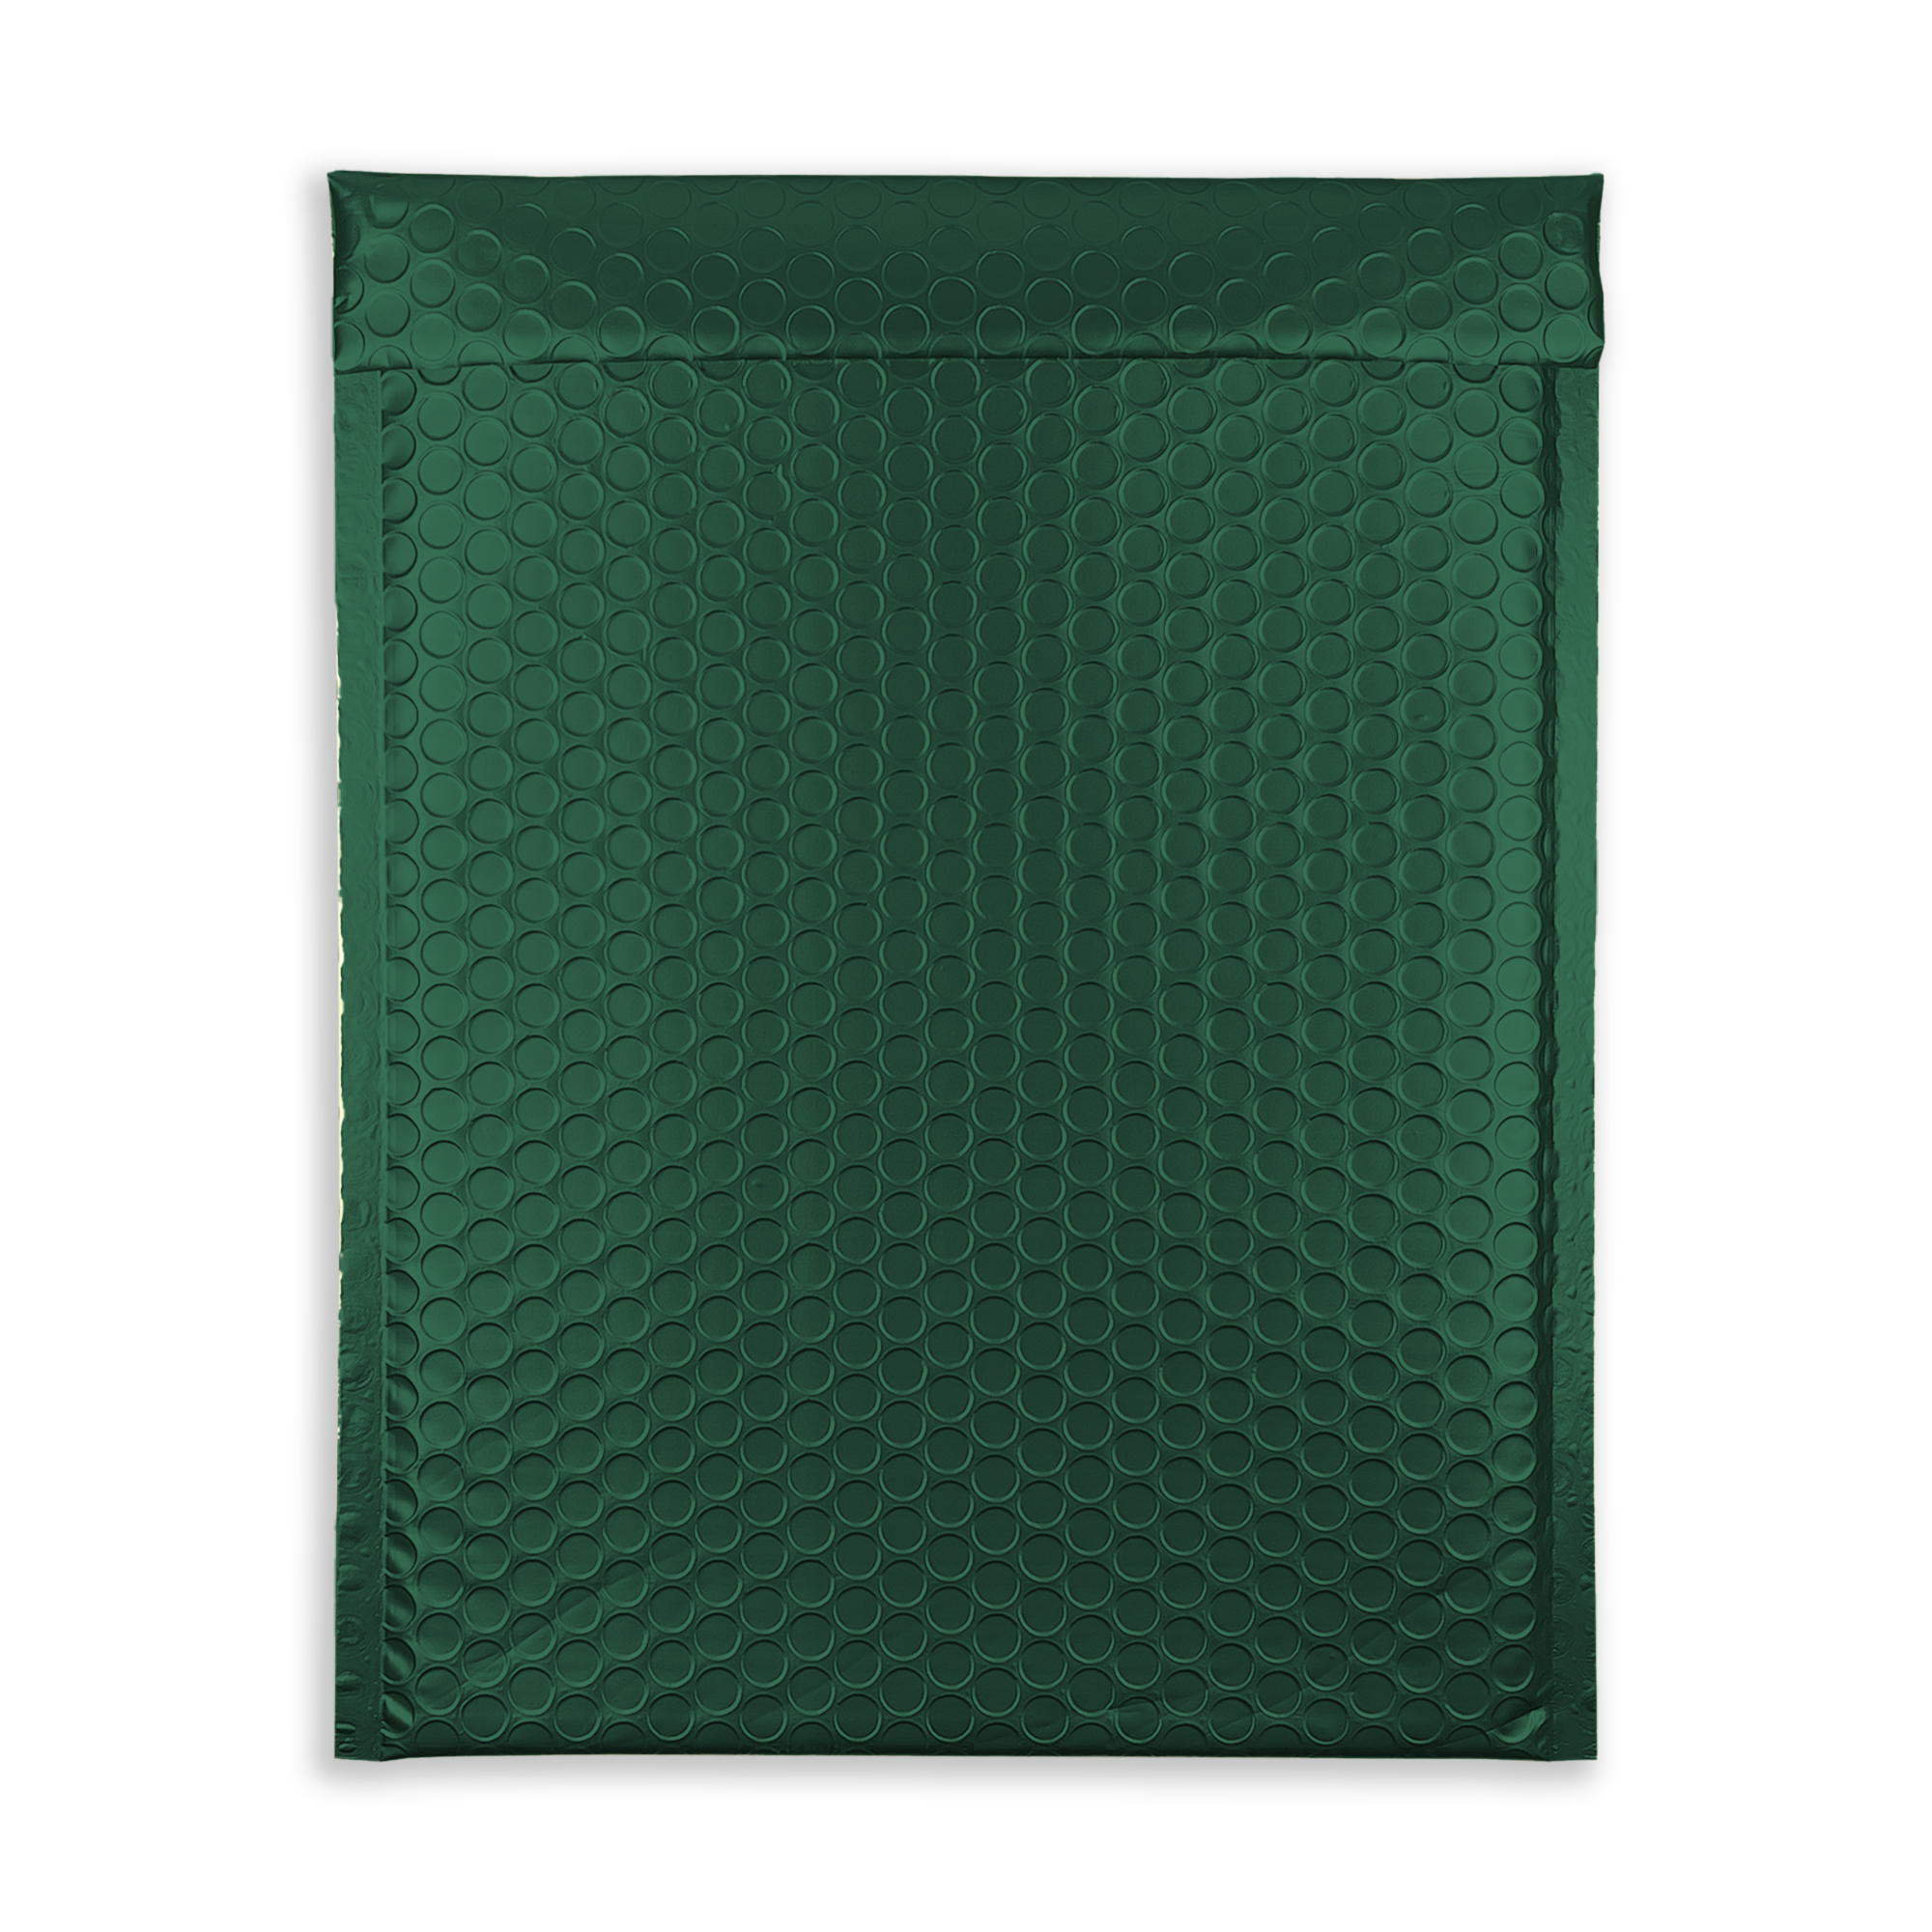 british-racing-green-bubble-padded-envelopes-matt-rectangle-flap-closed